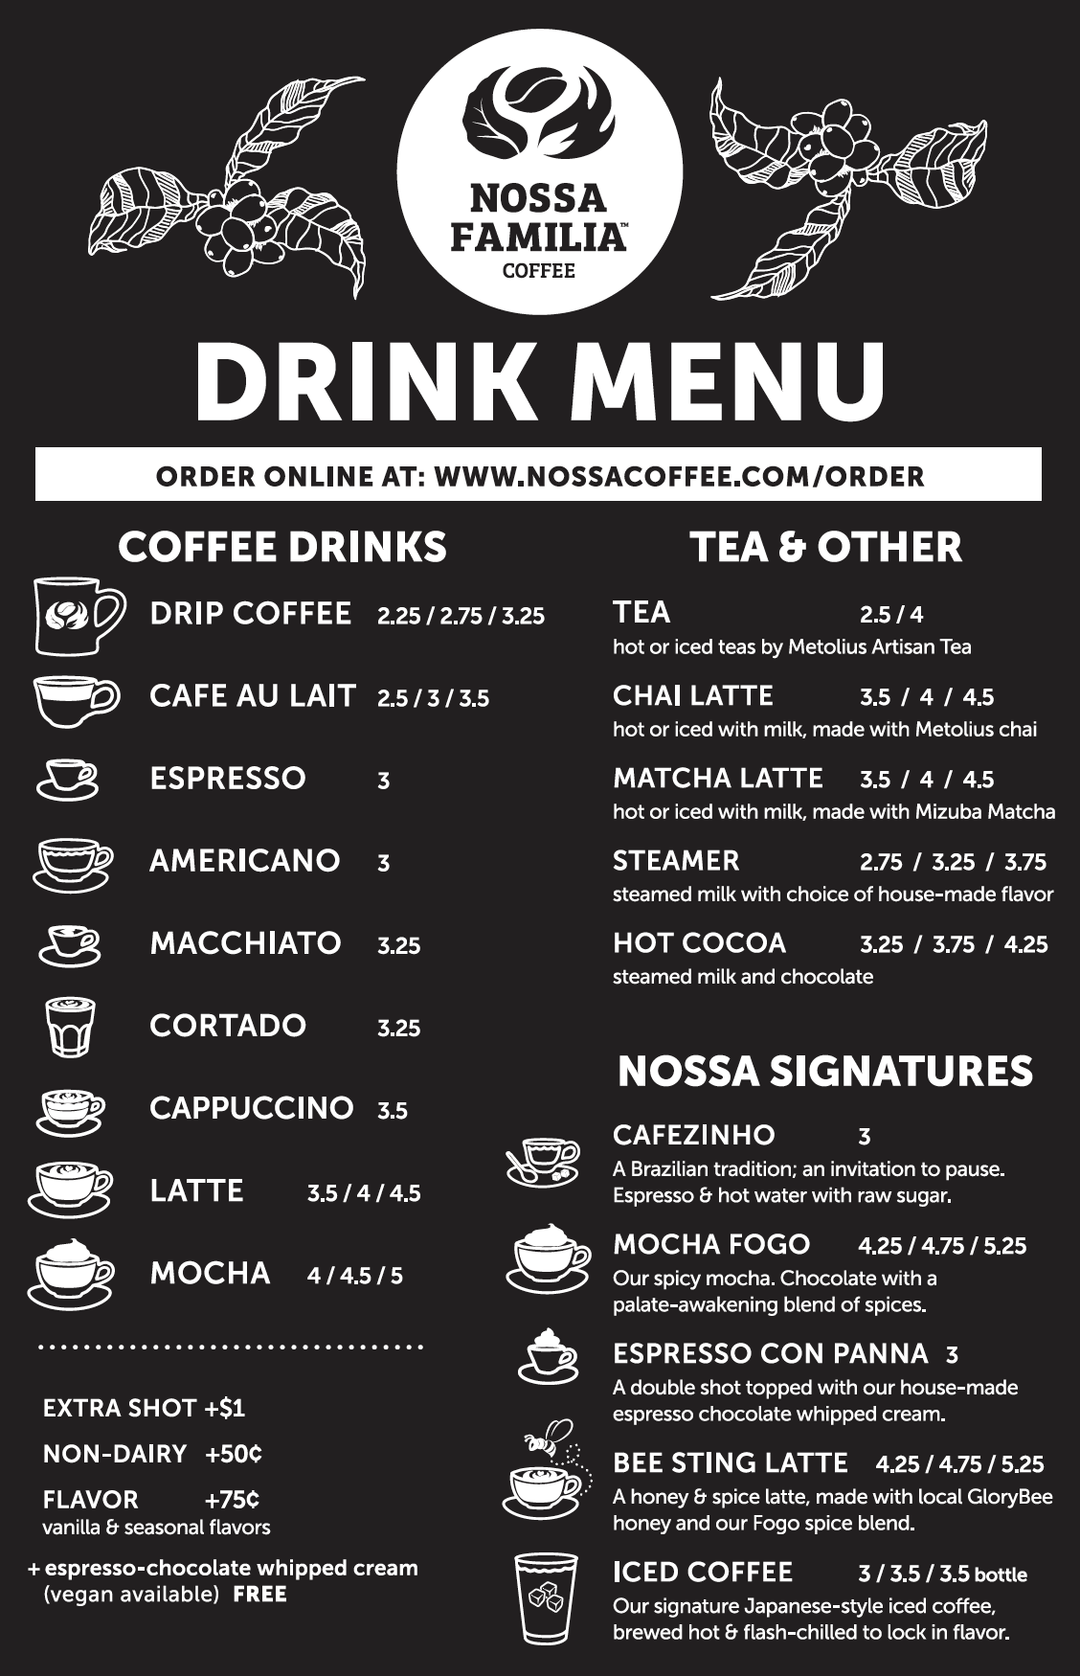 Drink Menu - order online or in person | Nossa Familia Coffee